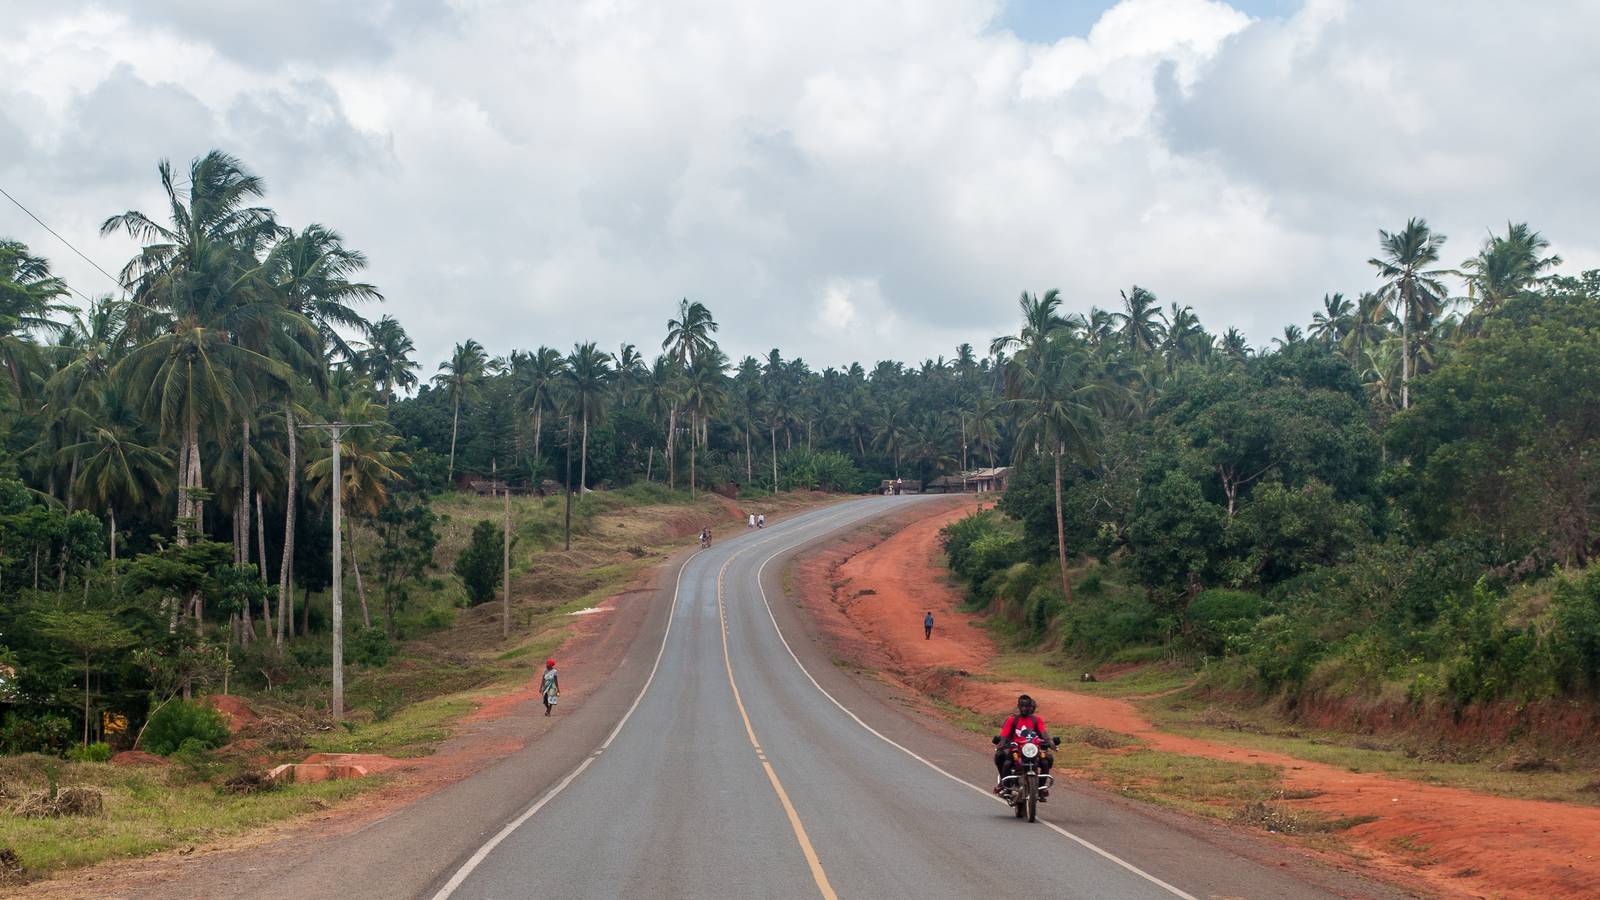 The road from Mombasa Airport through Mariakani